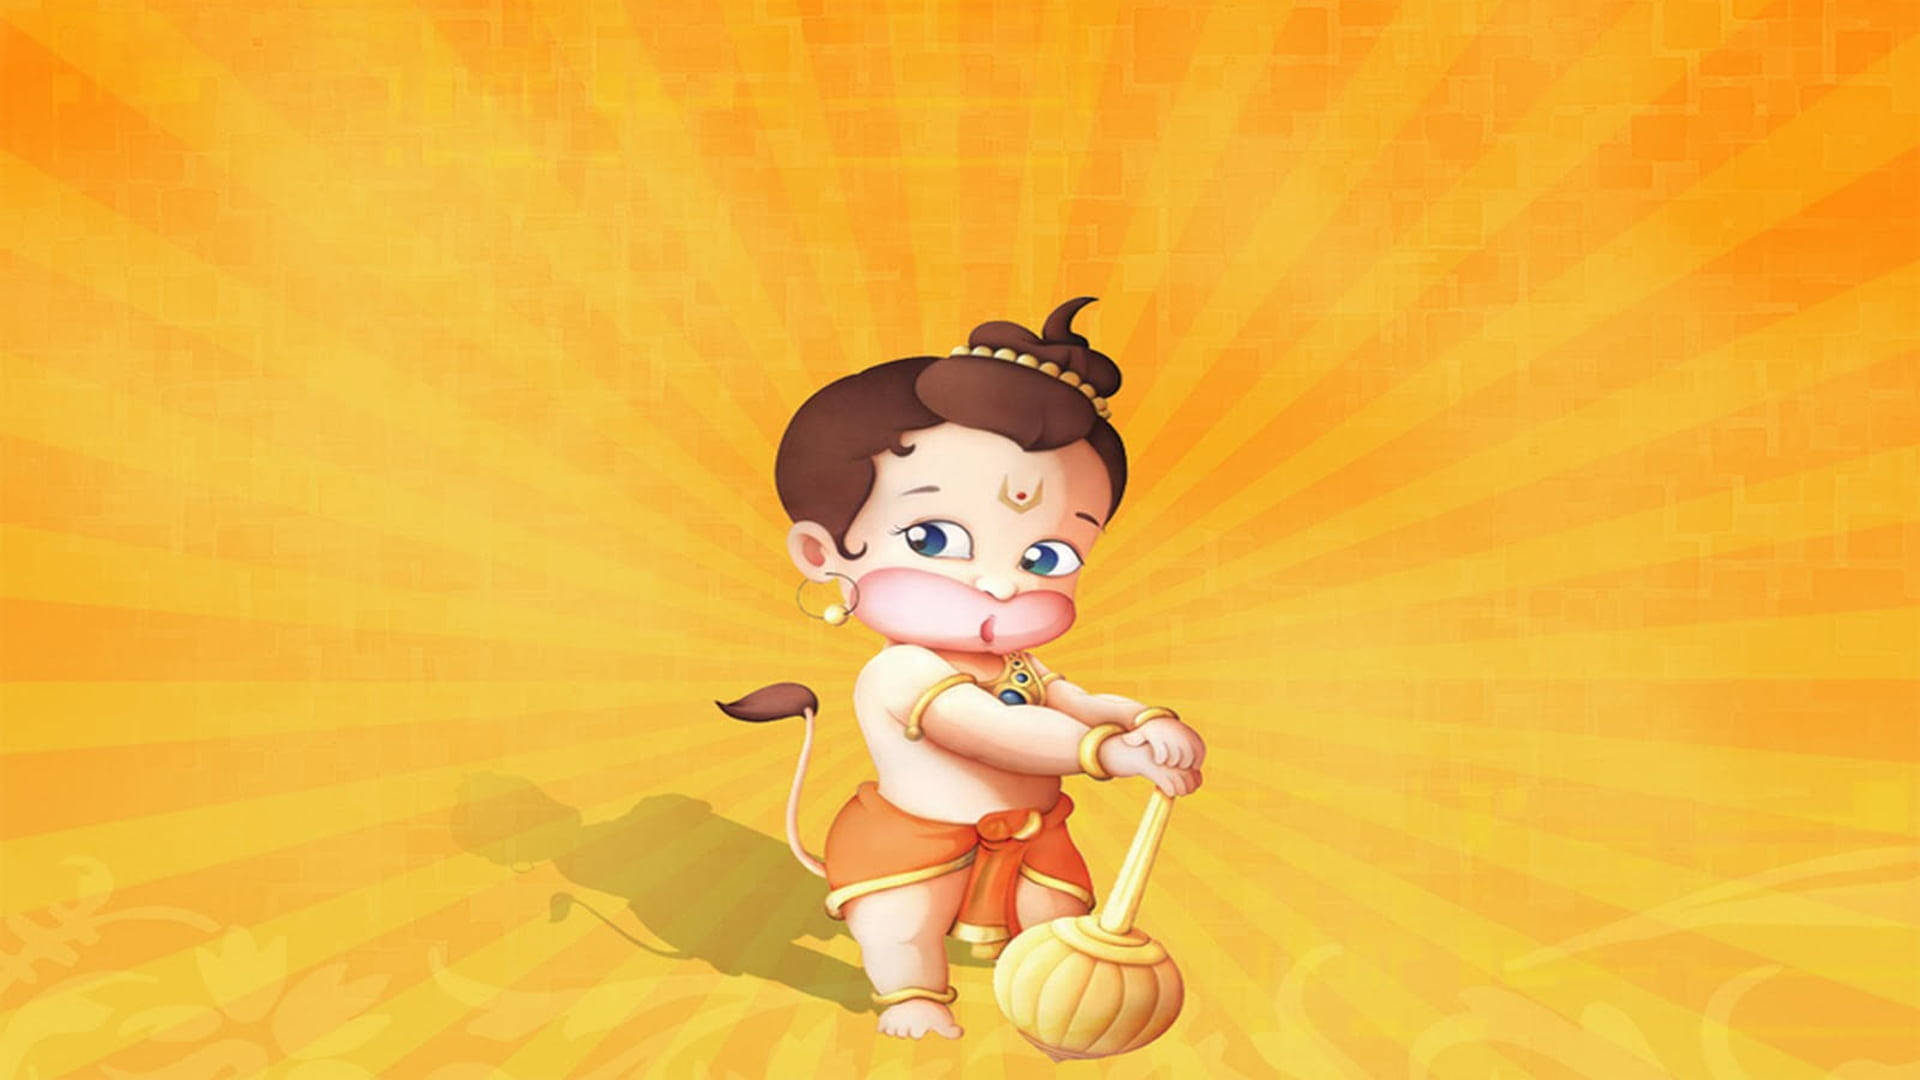 Baby God Hanuman With His Mace